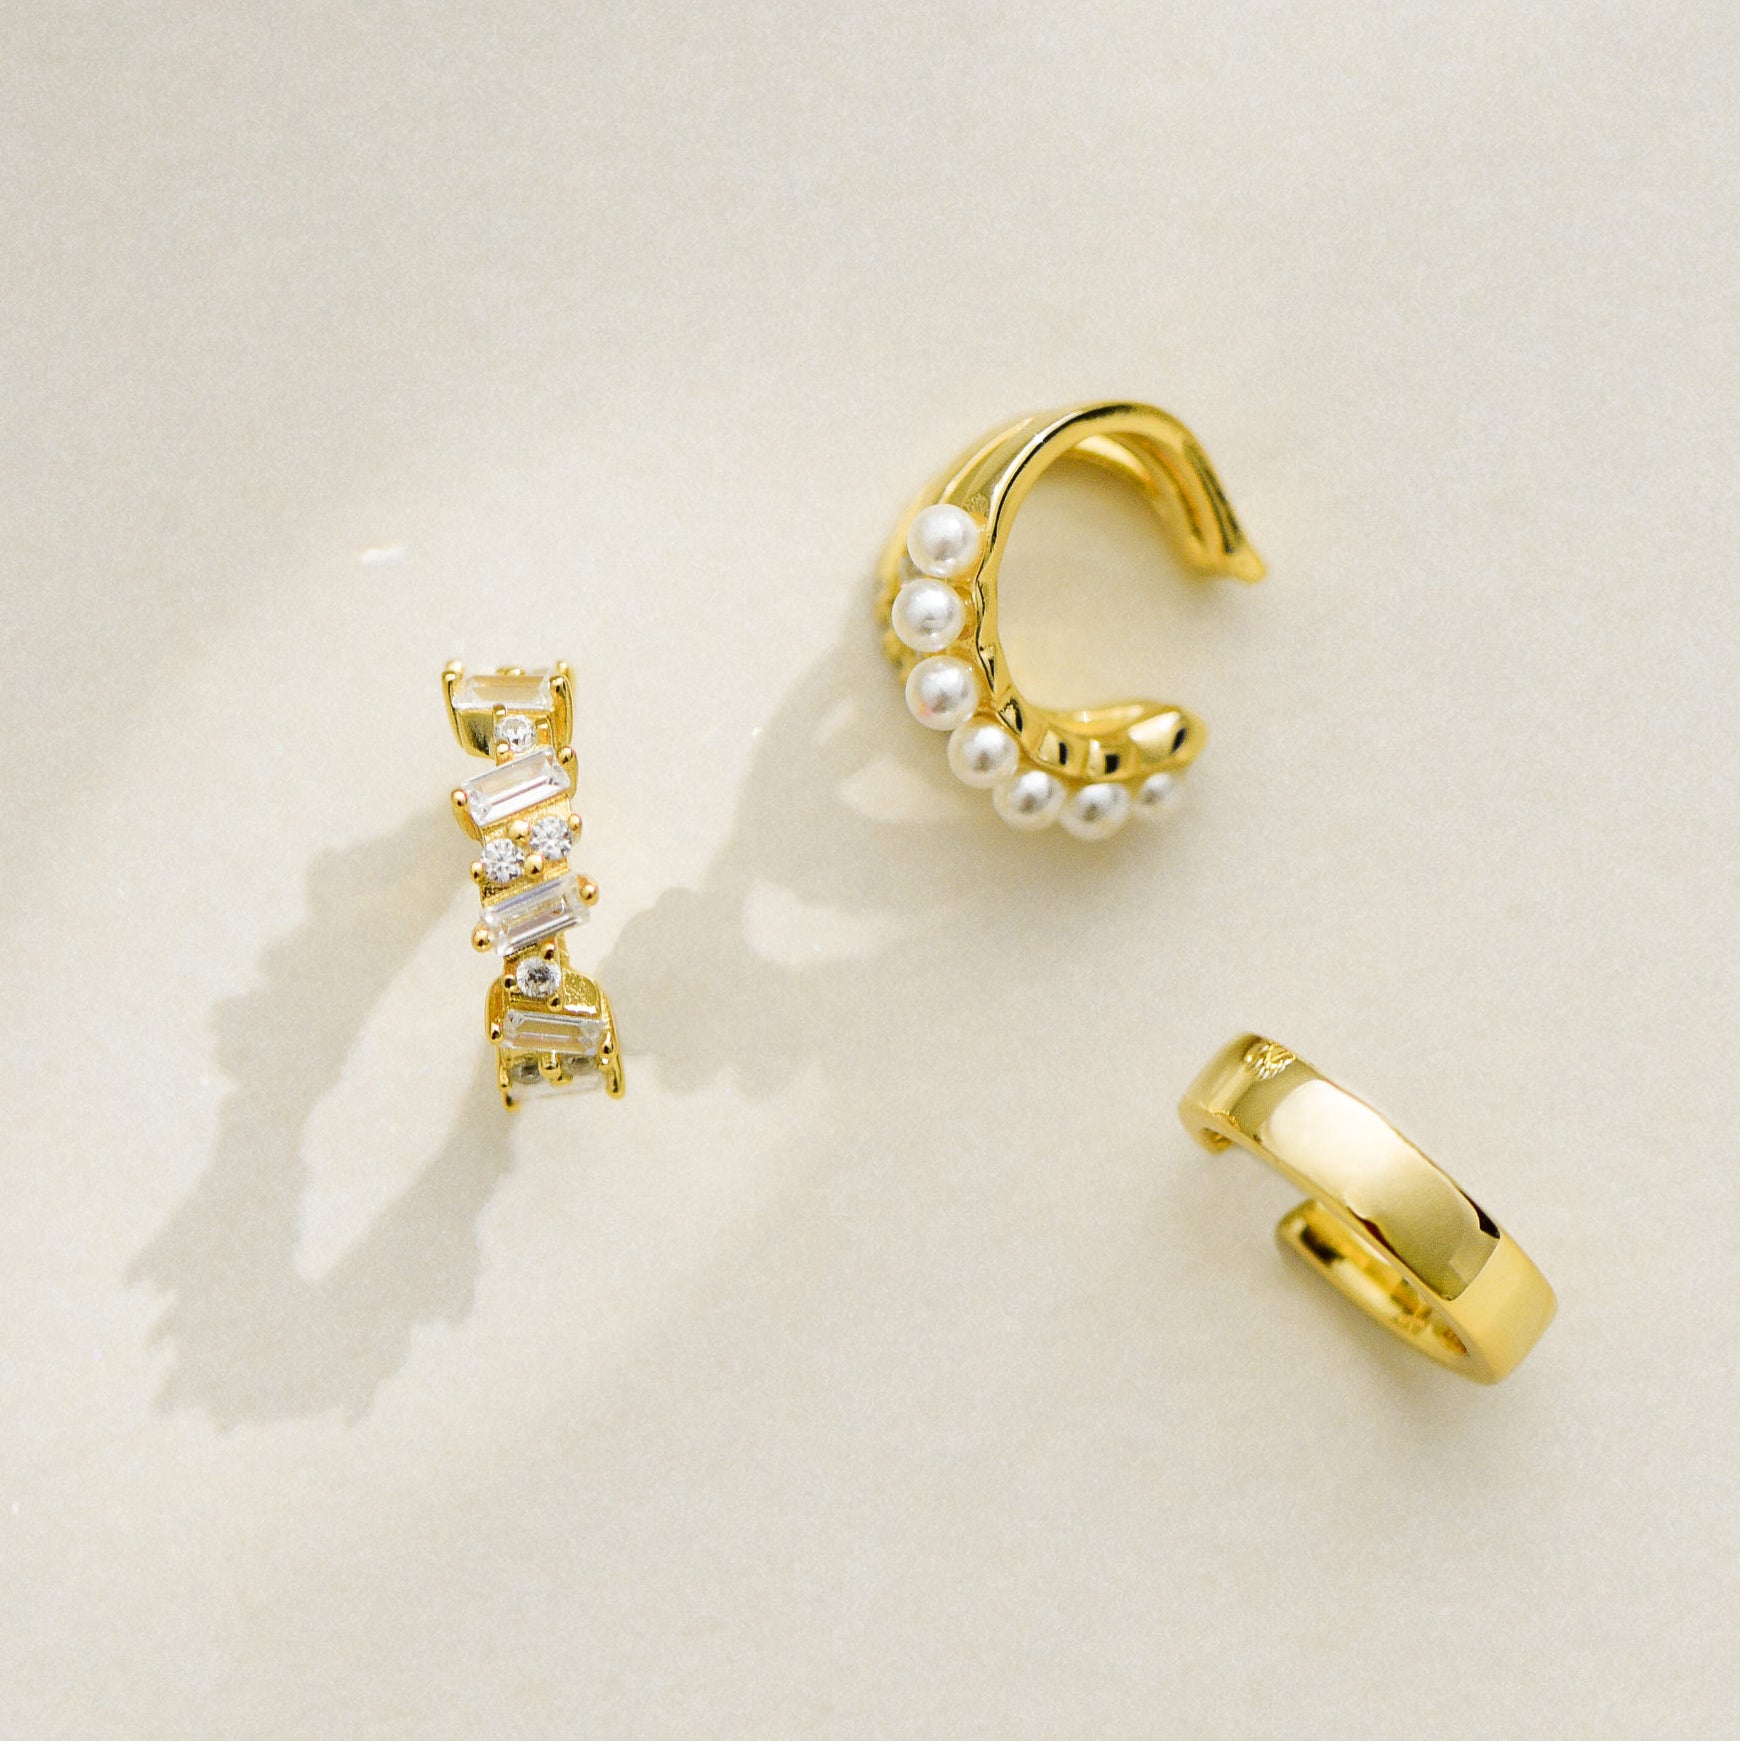 Selection of ear cuffs: Irregular Set Sparkle Ear Cuff Gold Vermeil, Minimalist Gold Vermeil Ear Cuff, Tripe Rows Pearl Ear Cuff Gold Vermeil